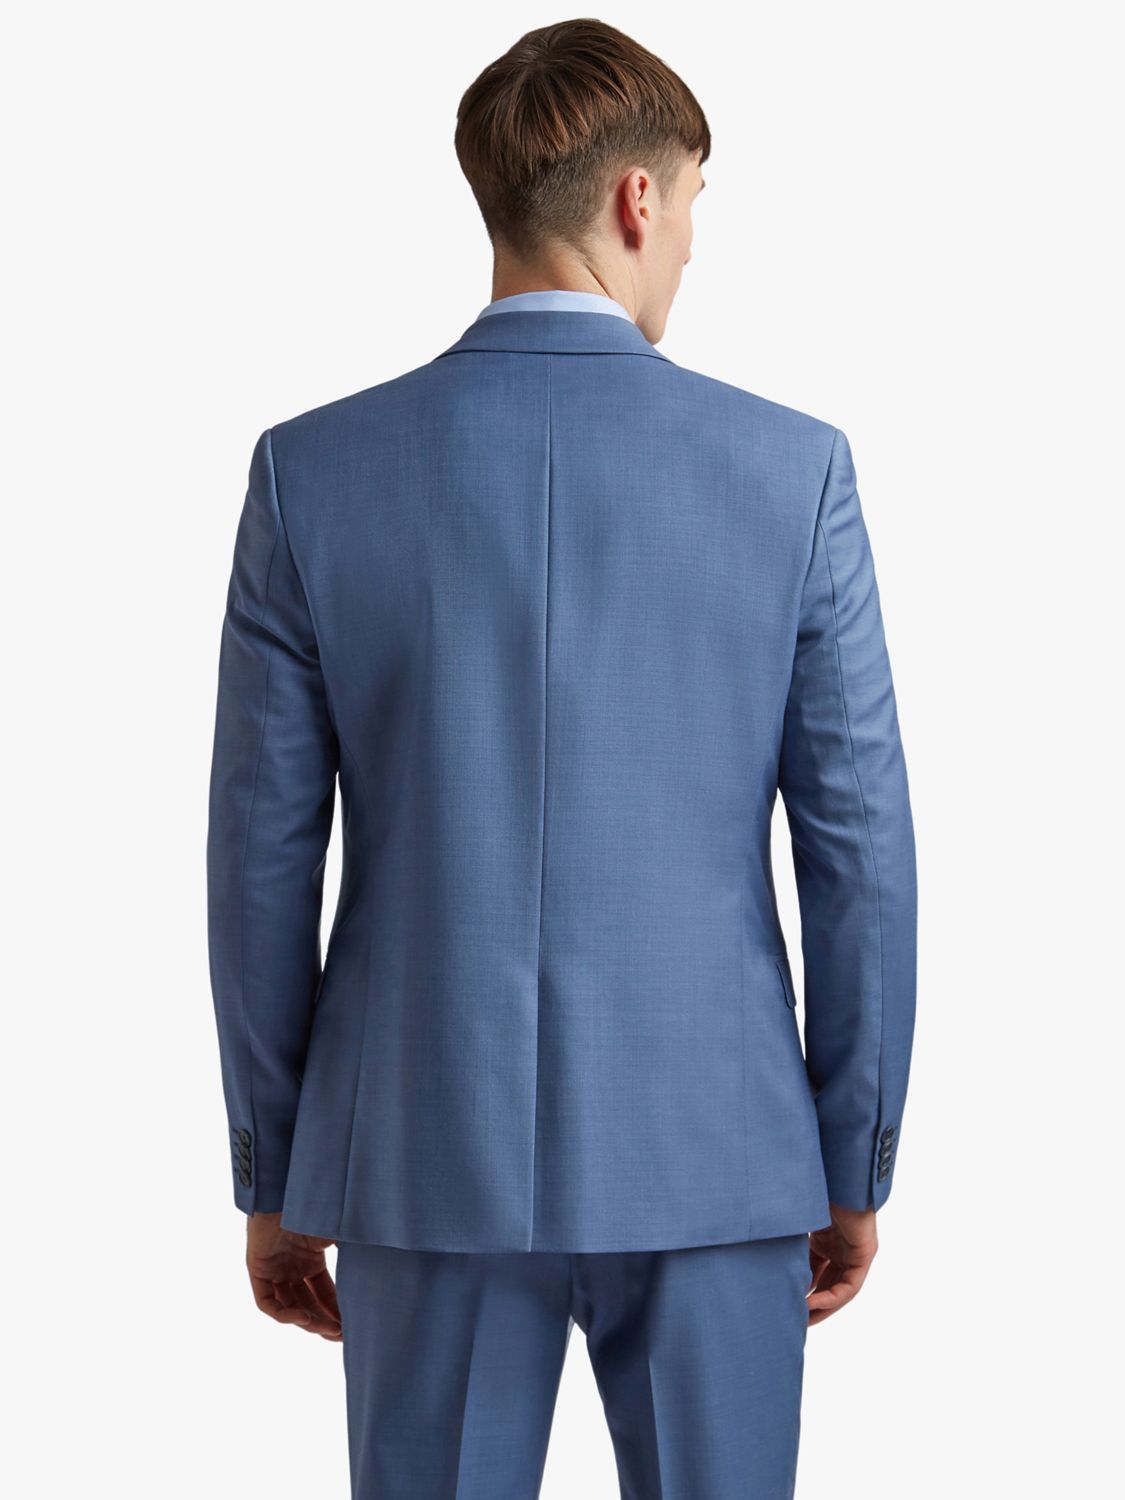 Ted Baker Dorset Slim Fit Suit Jacket at John Lewis & Partners